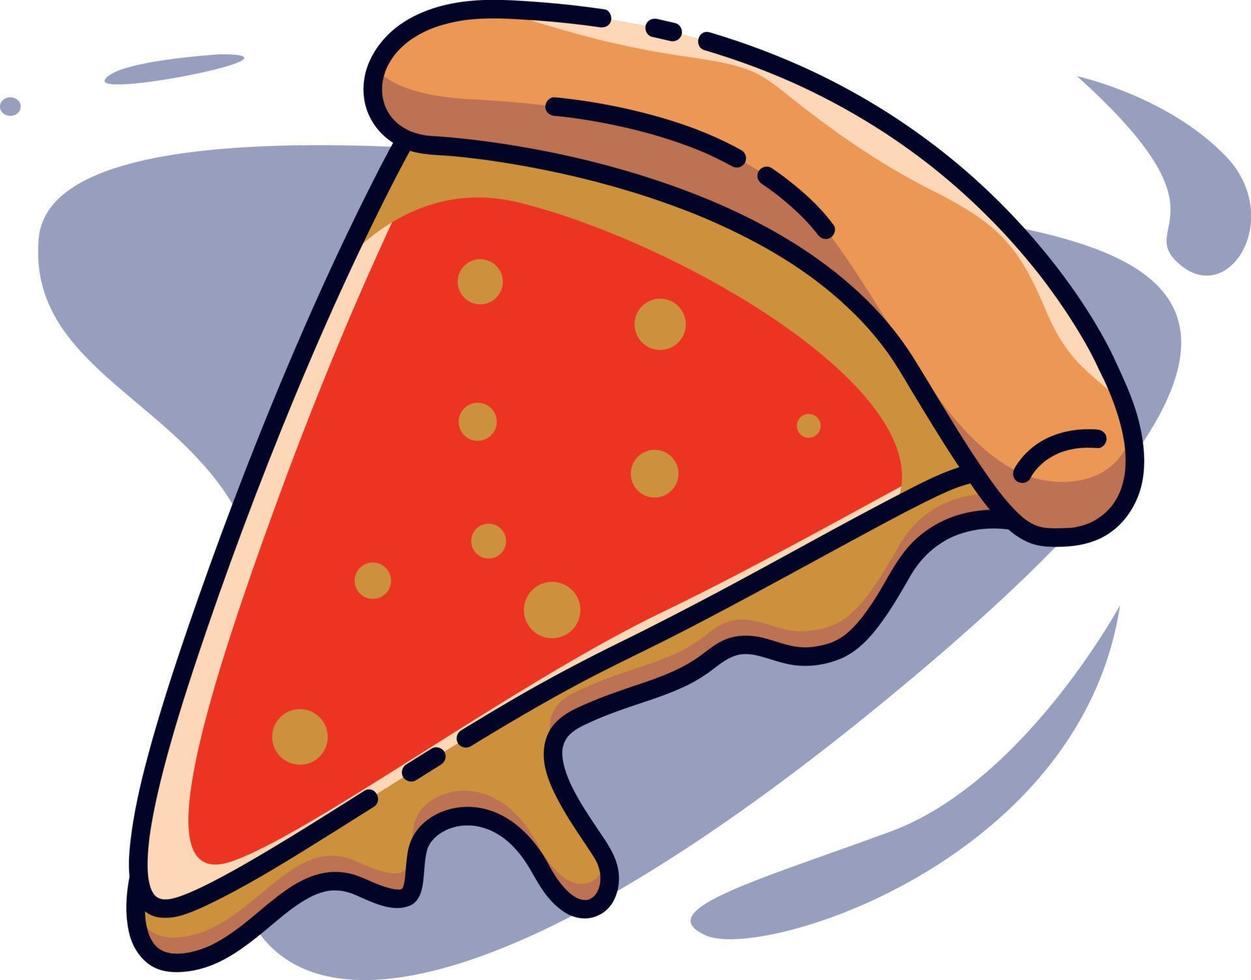 Pizza slice on white background, vector